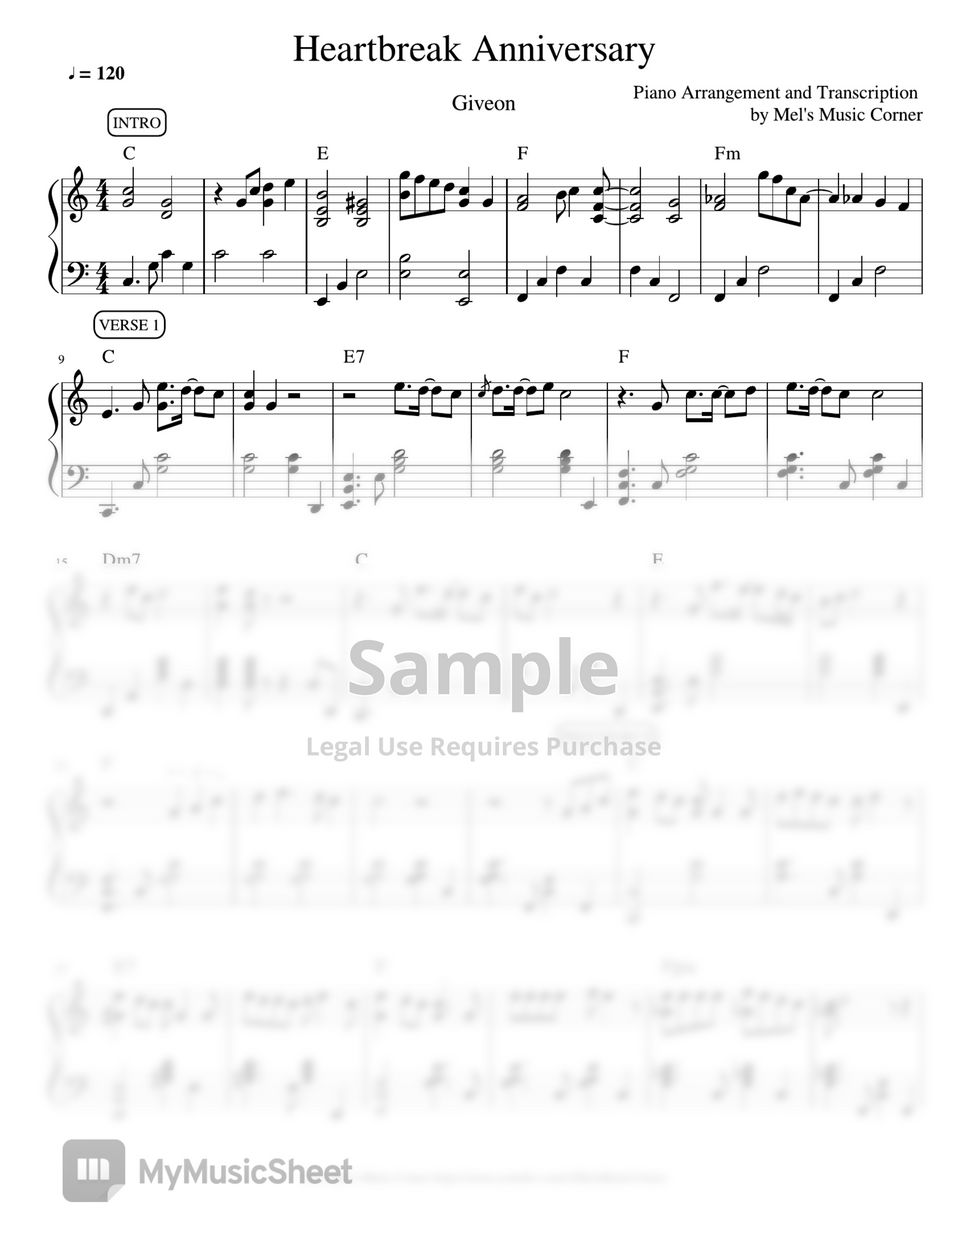 Giveon - Heartbreak Anniversary (piano sheet music) by Mel's Music Corner